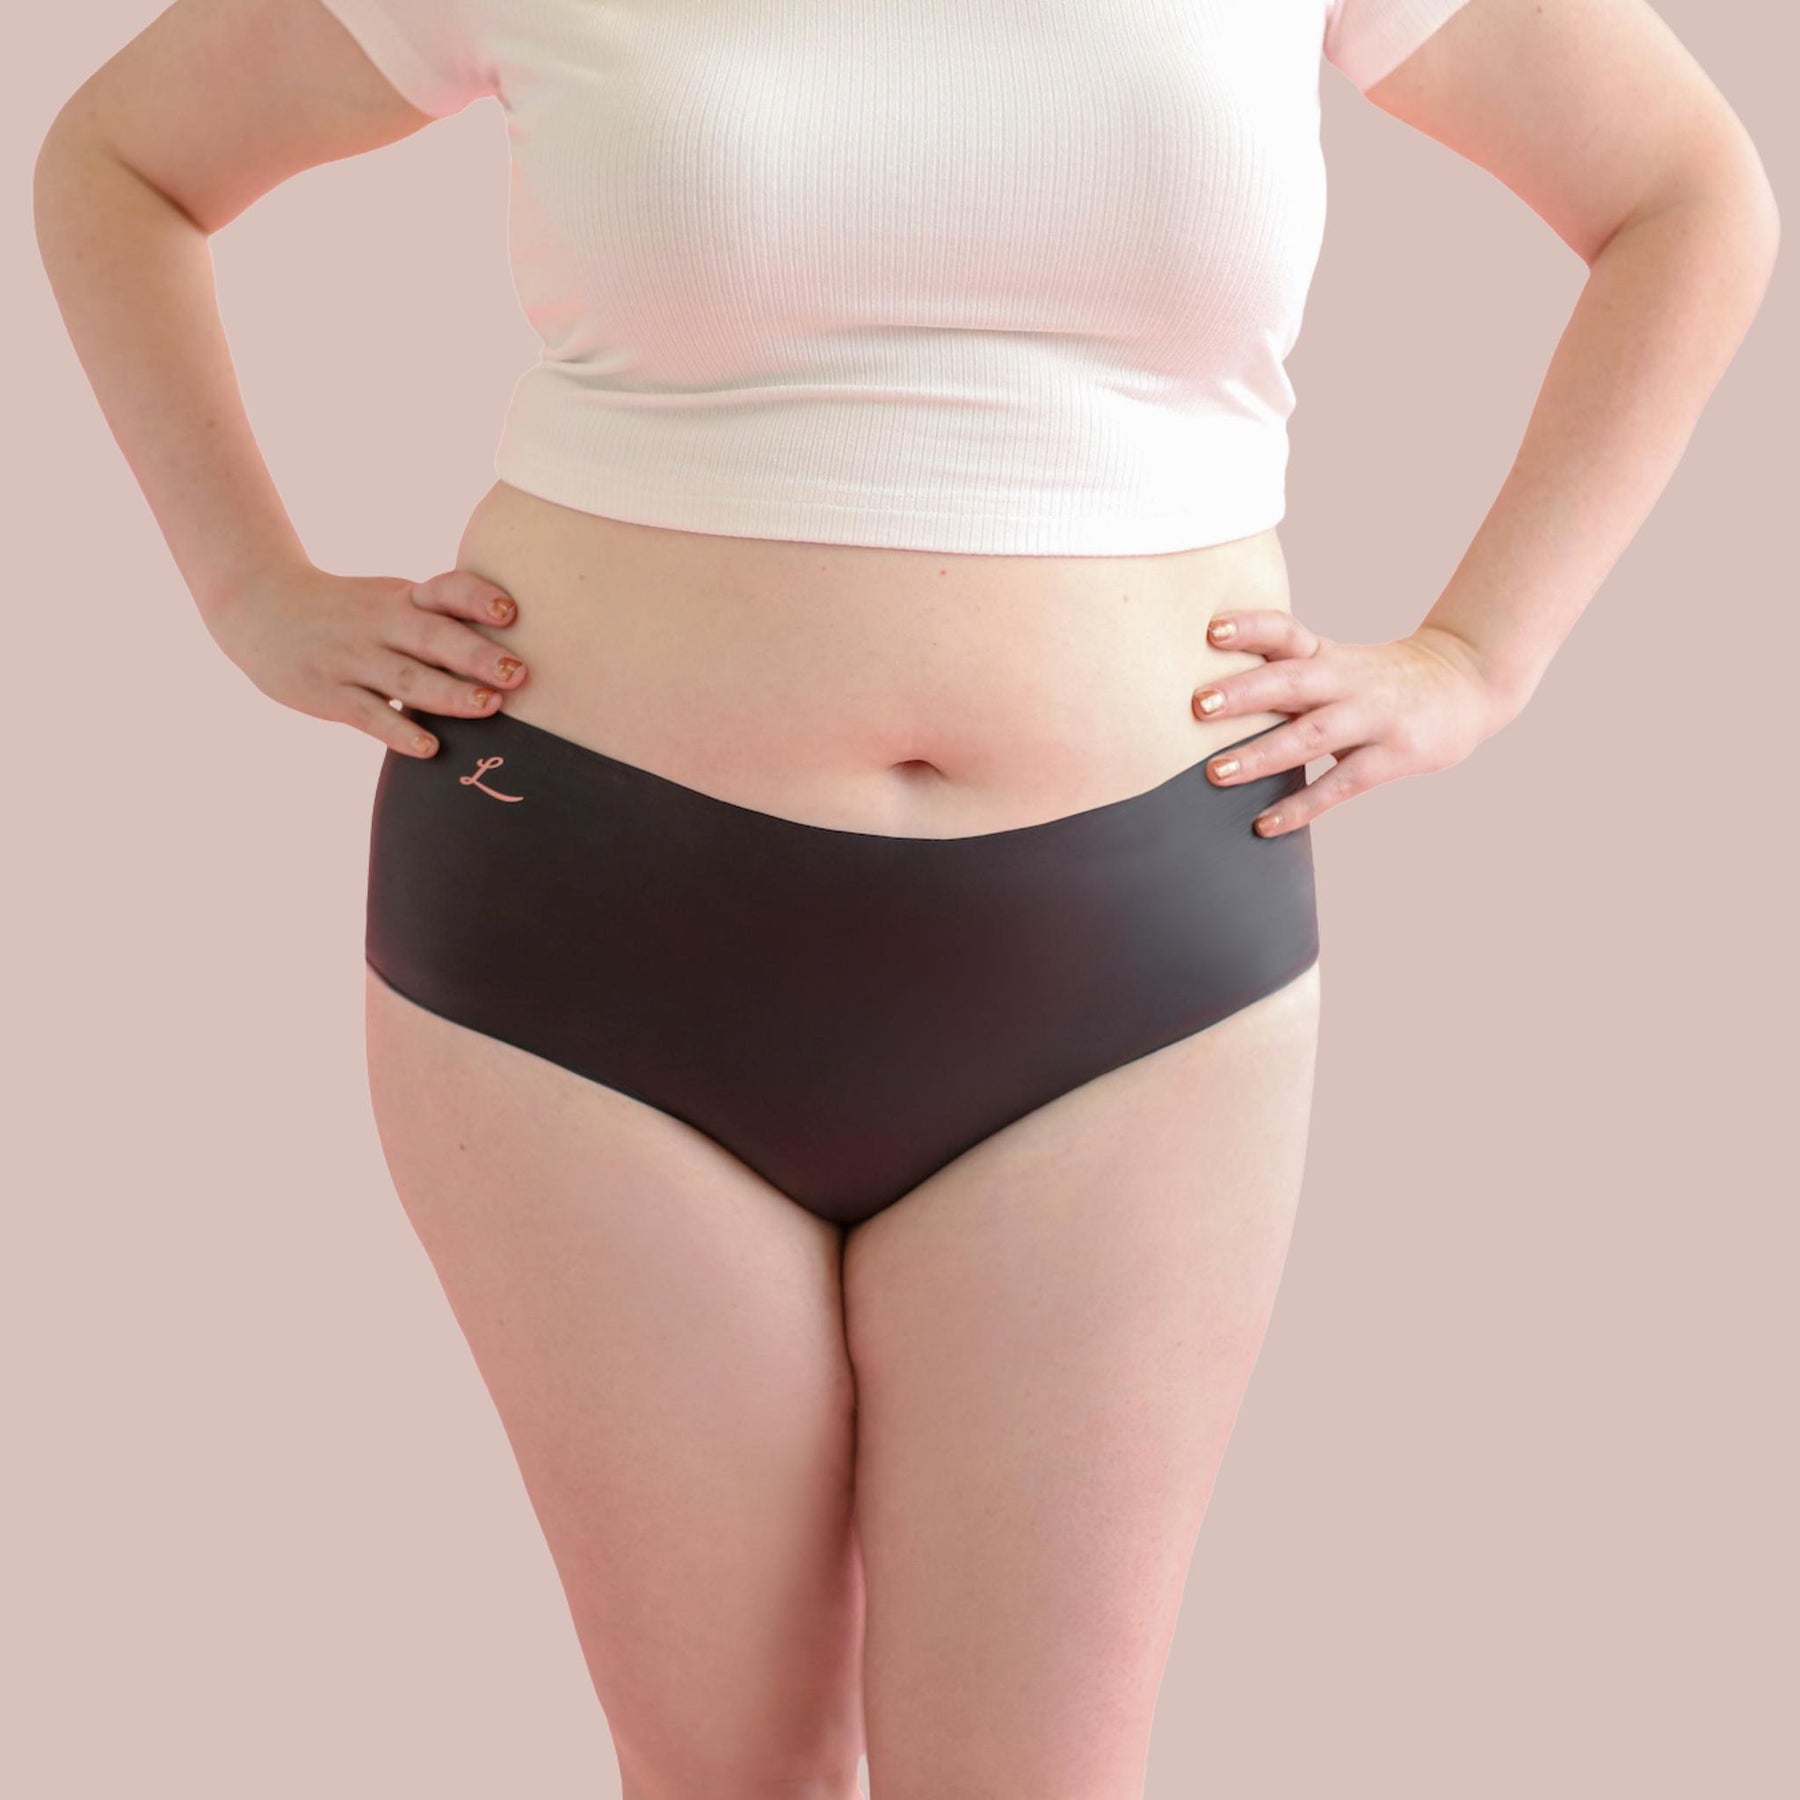 Lorals model Amanda demonstrates the front view of Pleasure Undies in Black Shorties